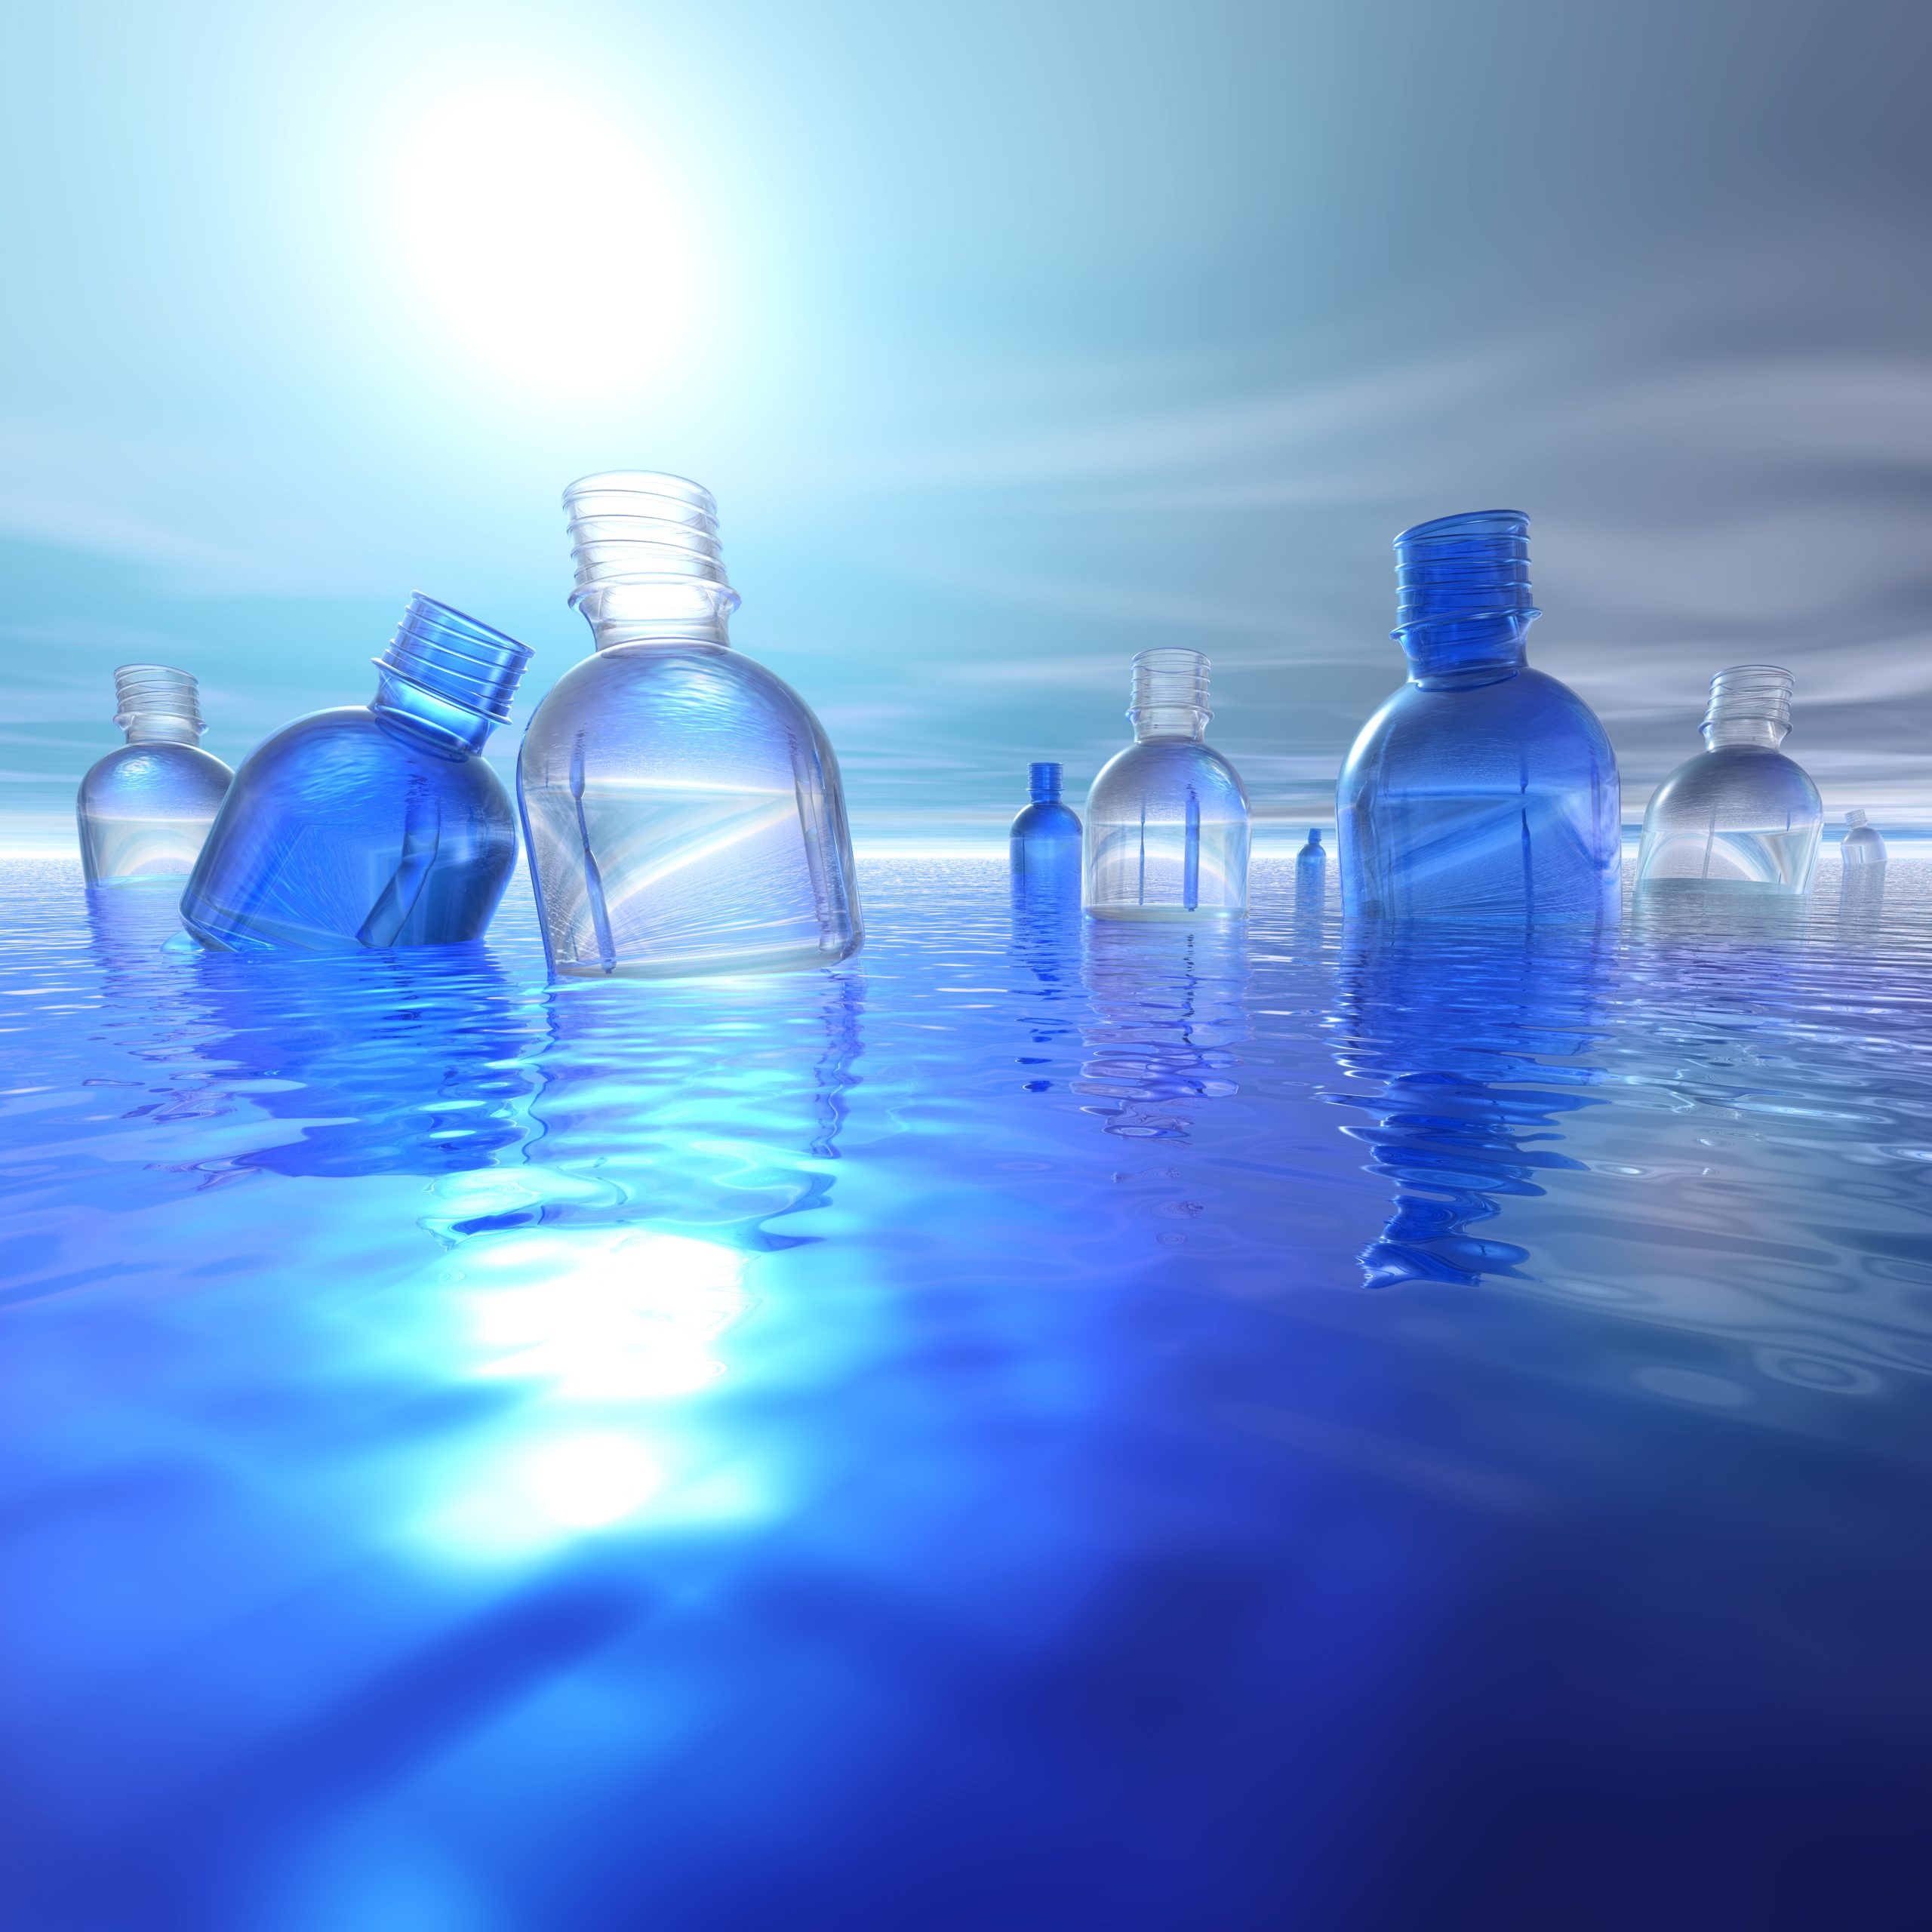 Plastic bottles are “chocking” Greek islands